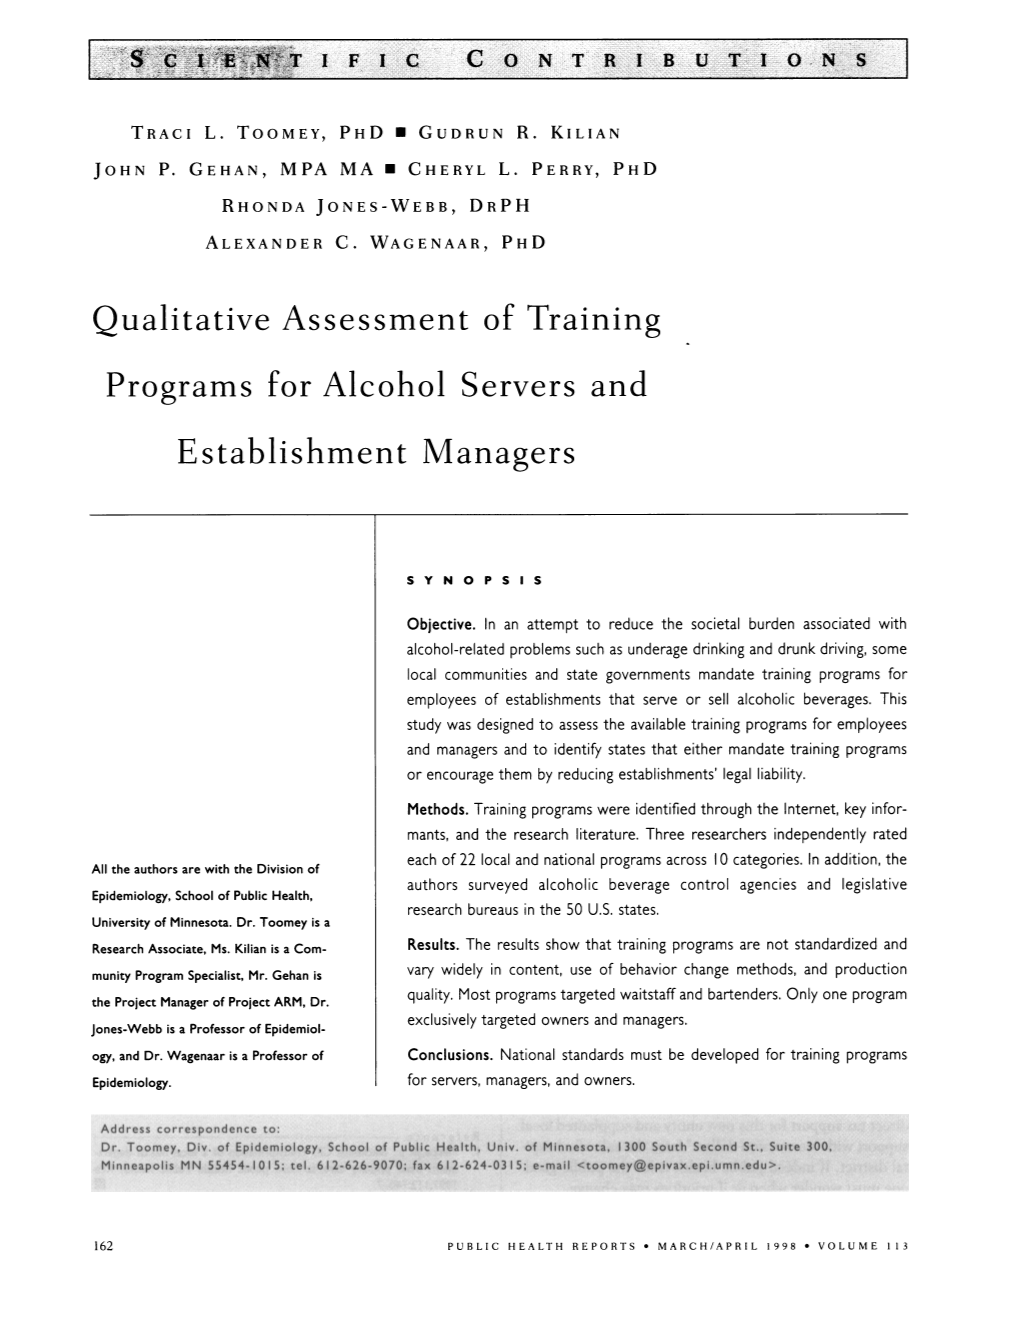 Qualitative Assessment of Training Programs for Alcohol Servers and Establishment Managers